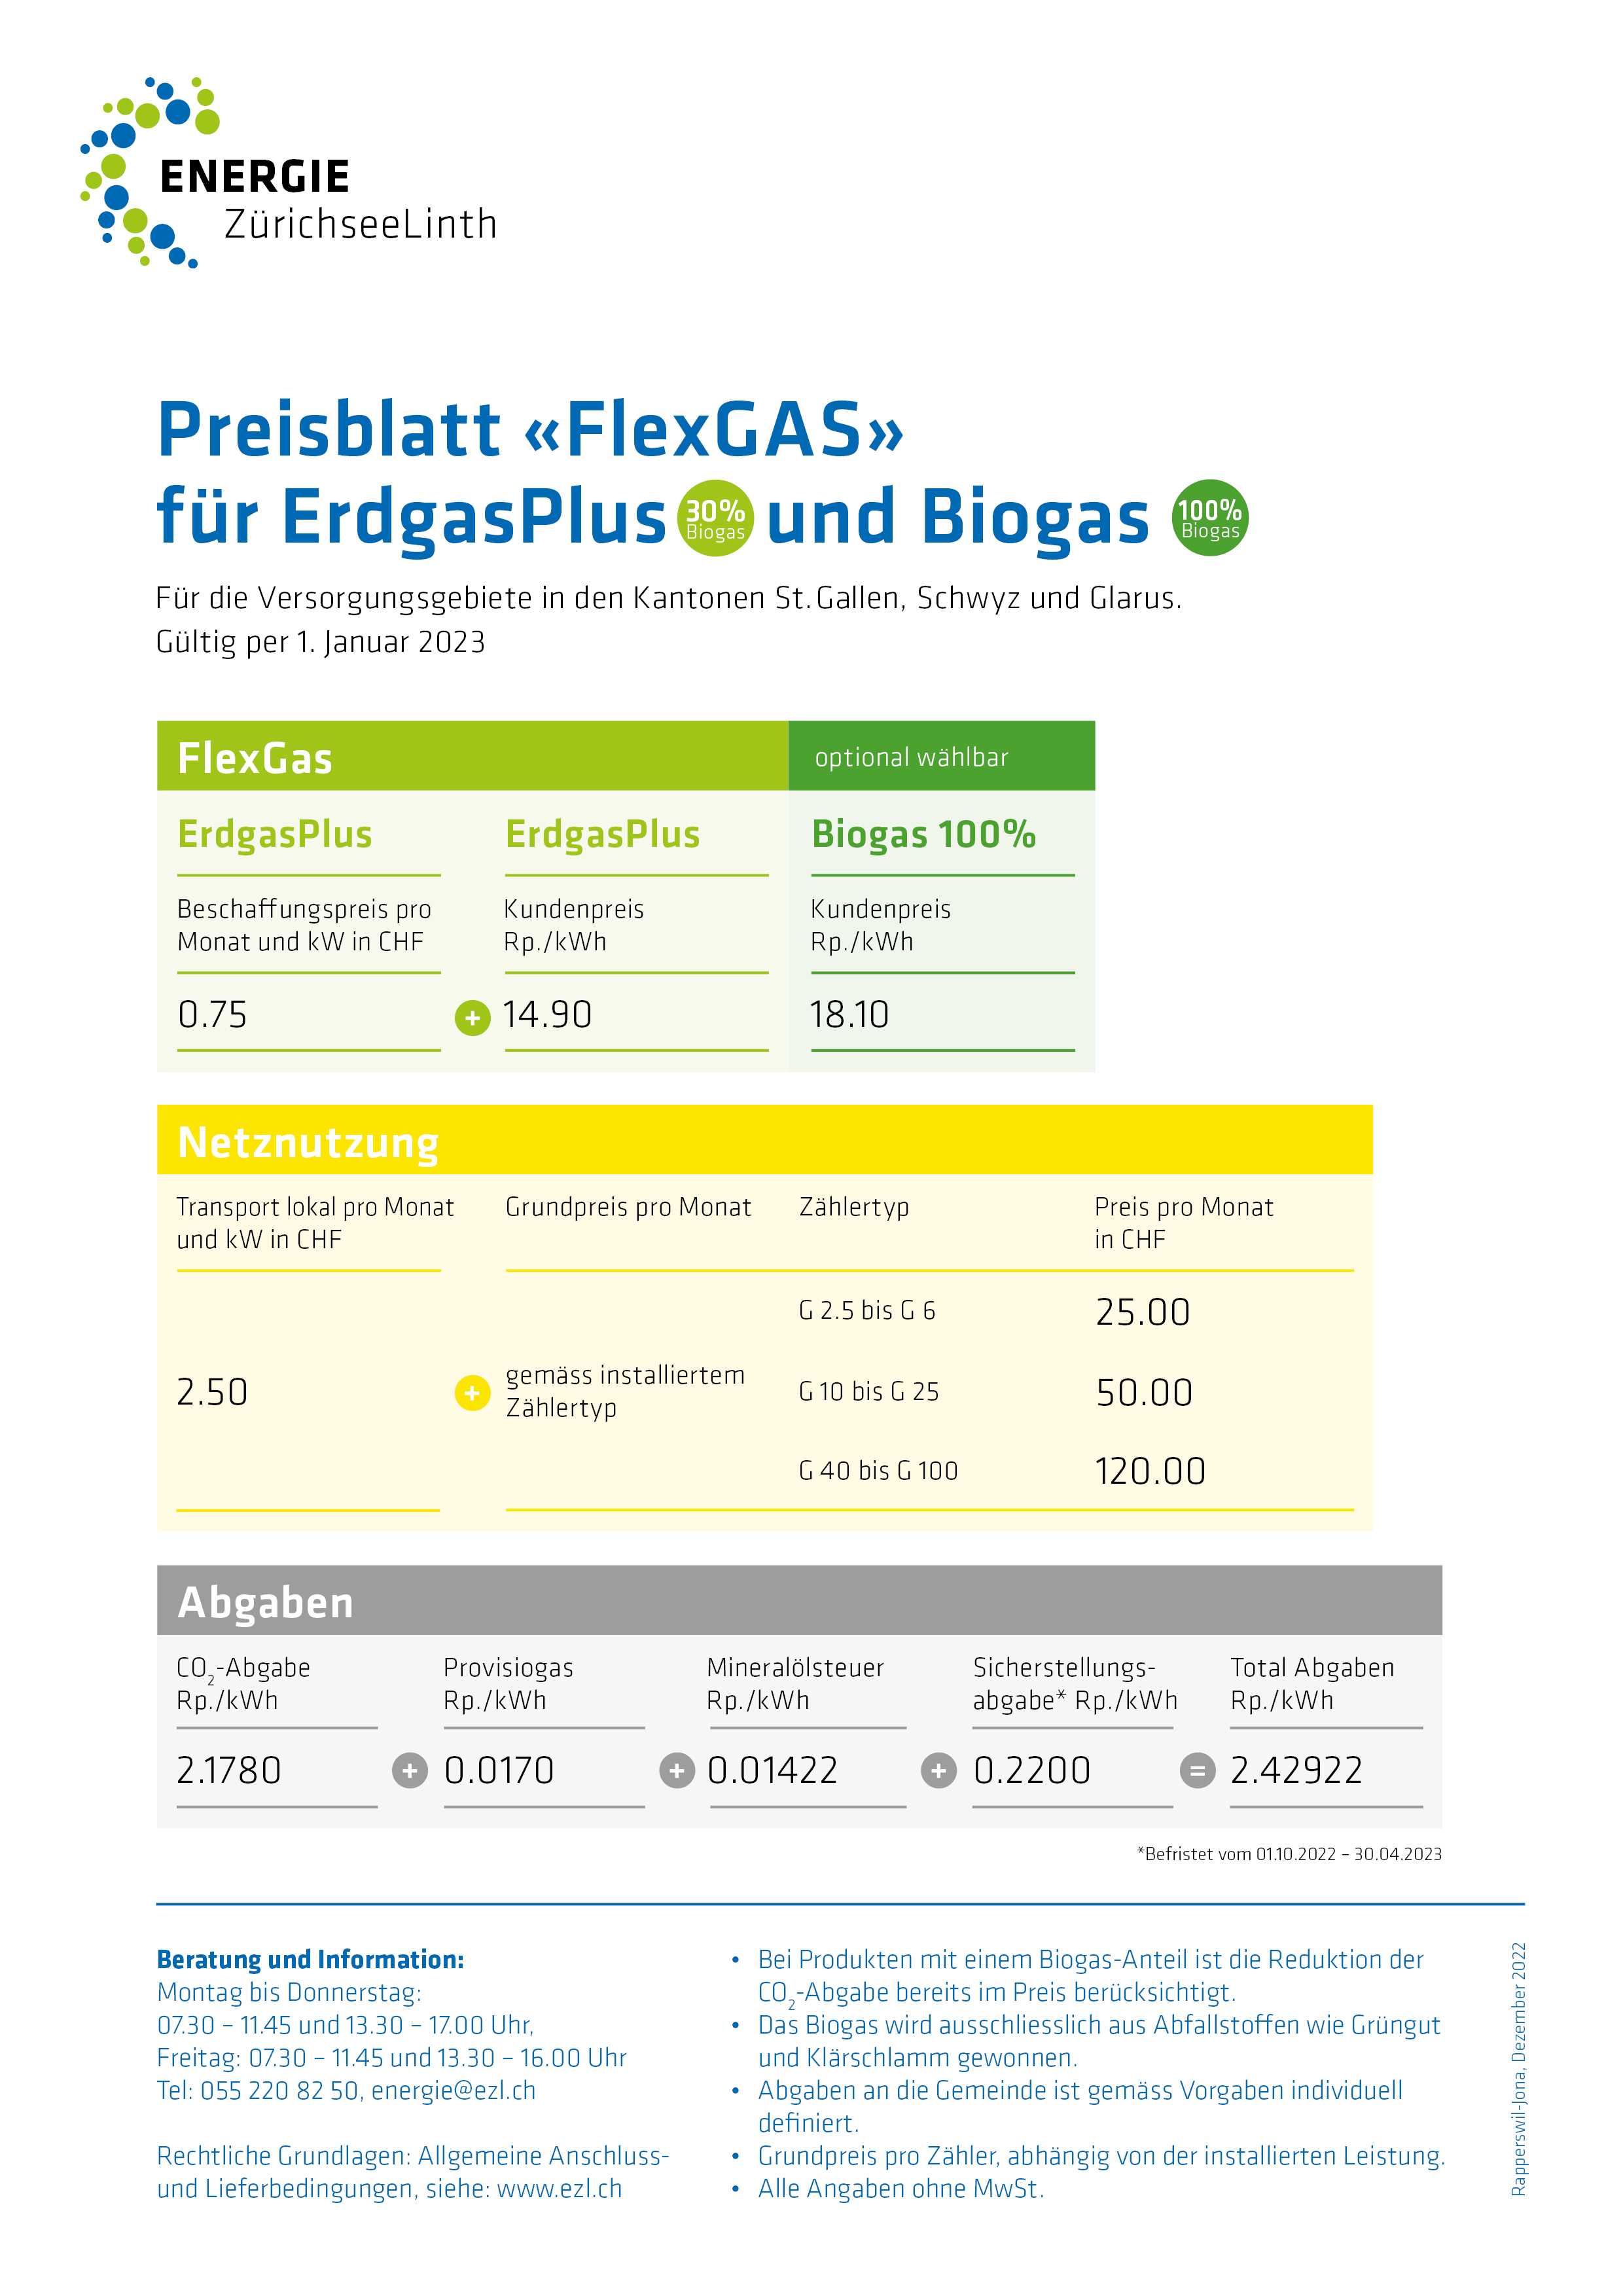 Preisblatt FlexGAS für ErdgasPlus ab102022